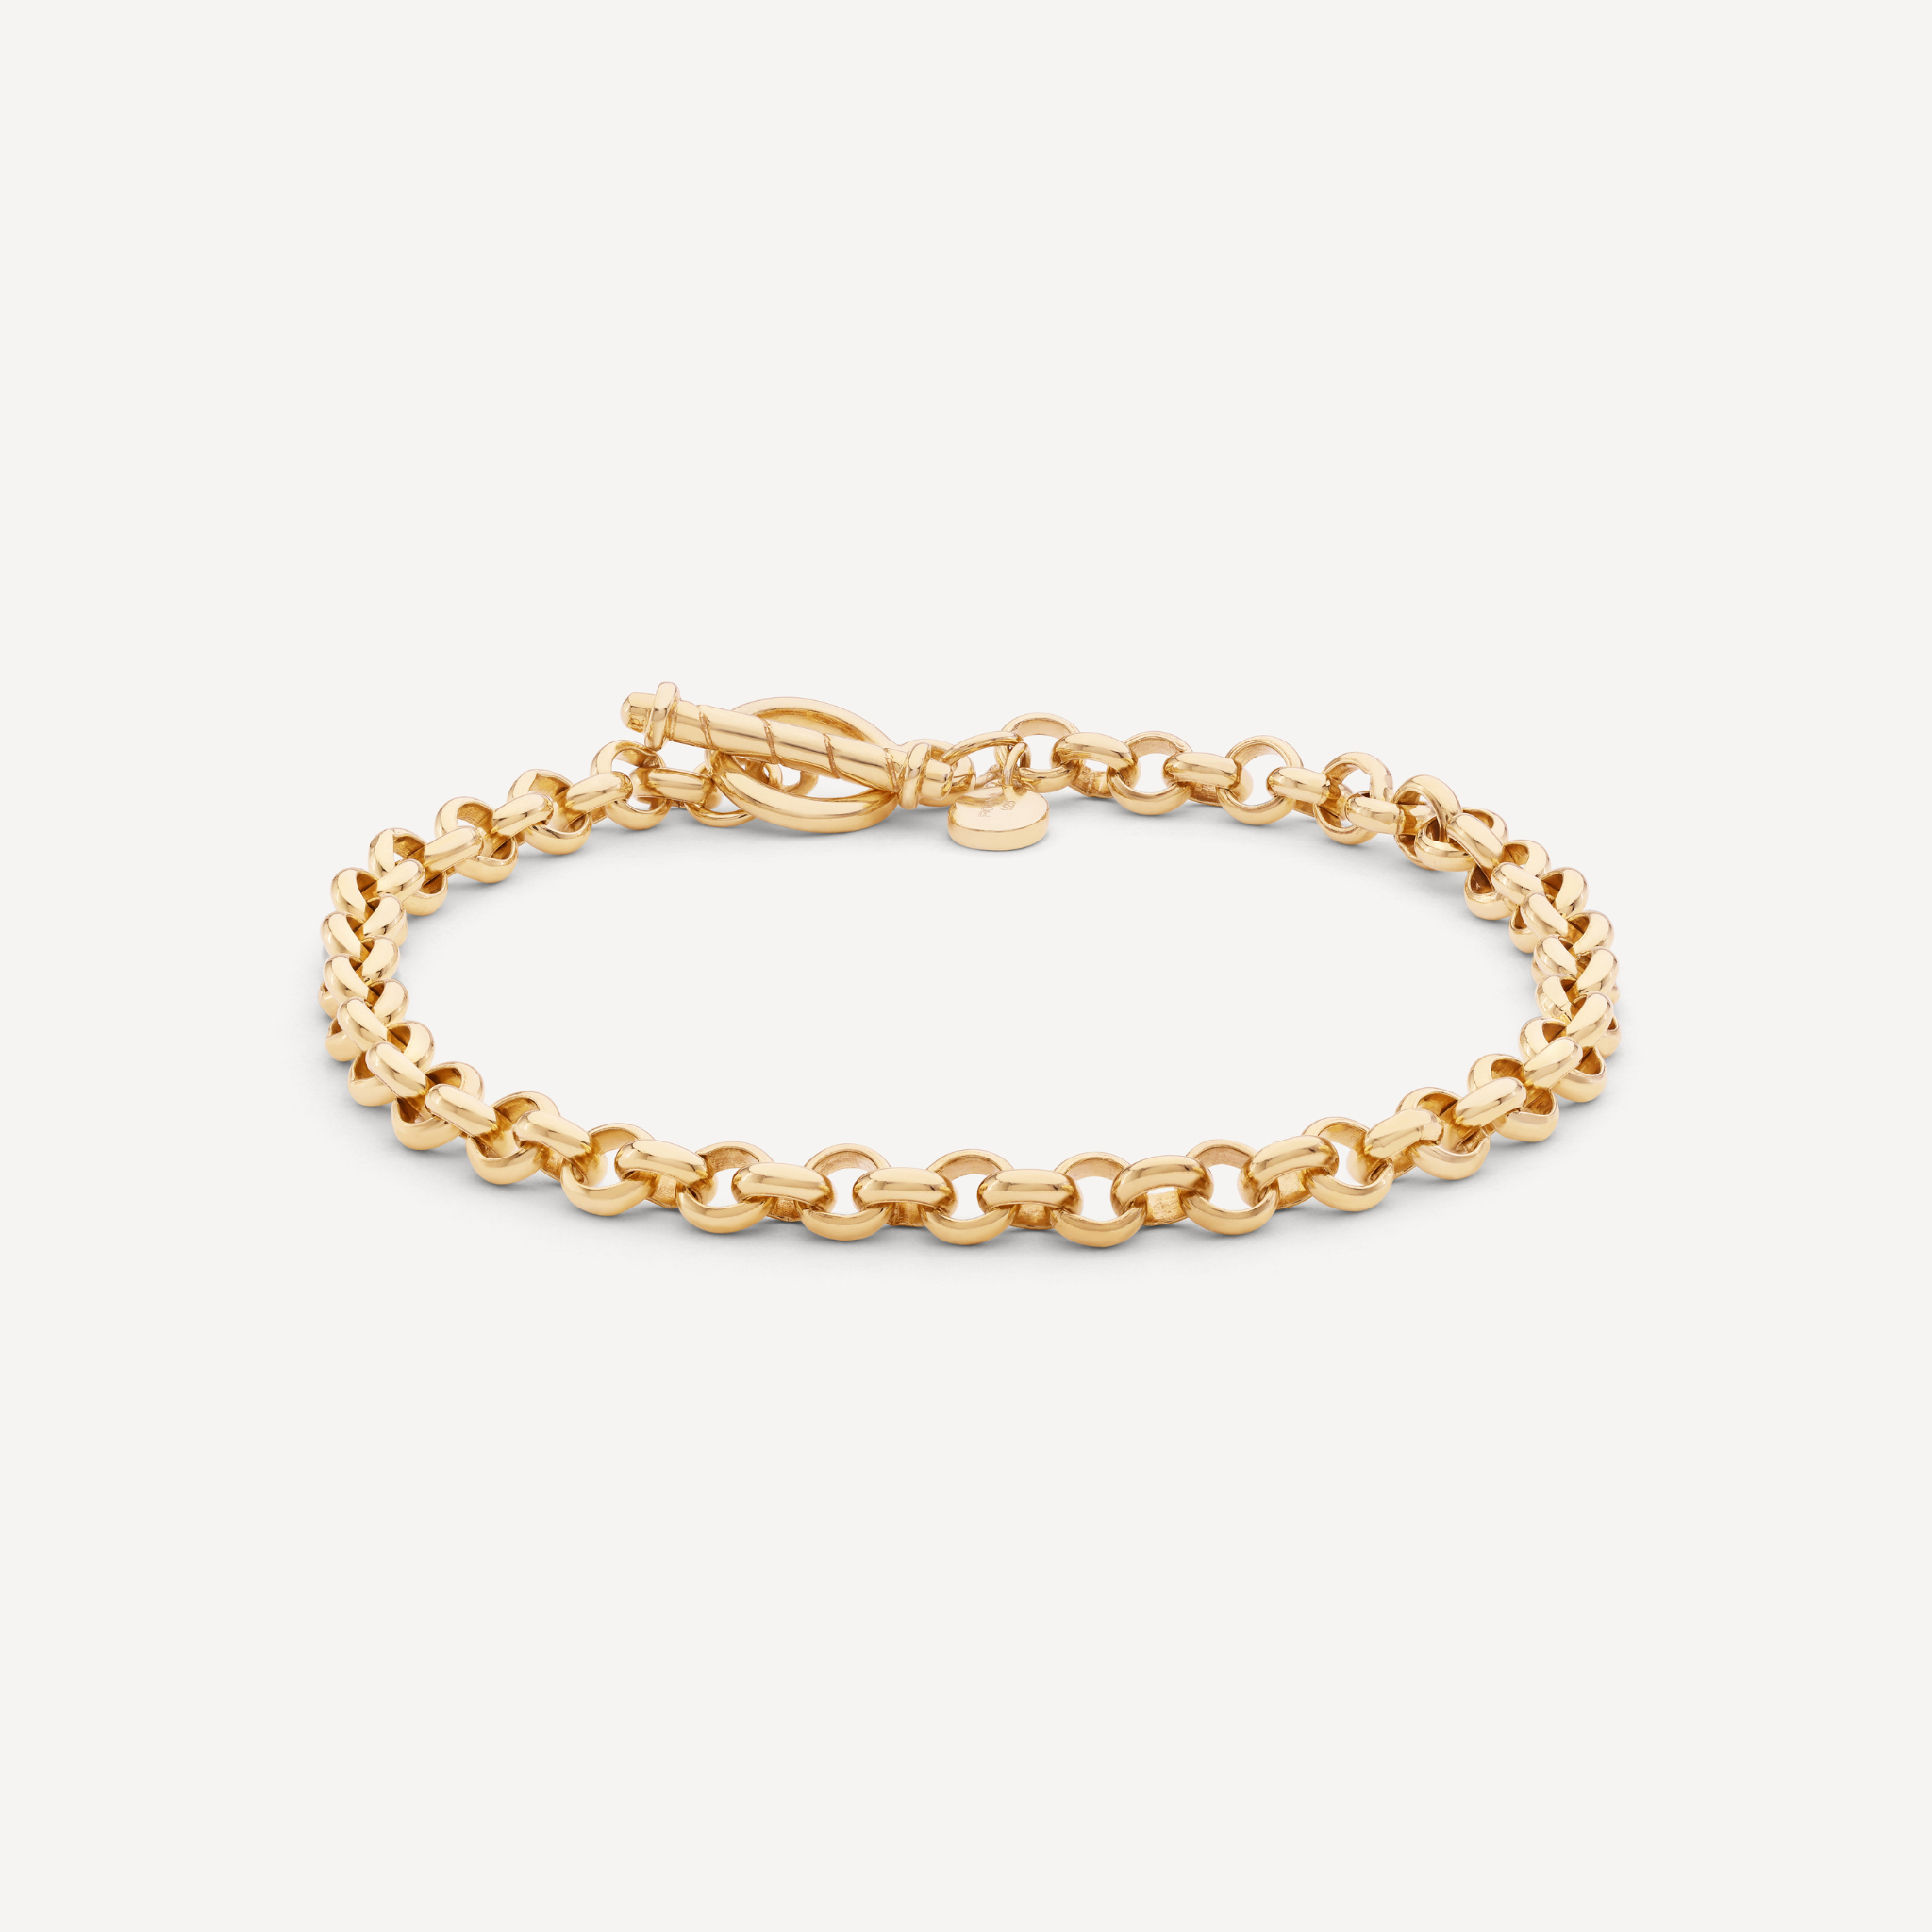 Shona gold bracelet